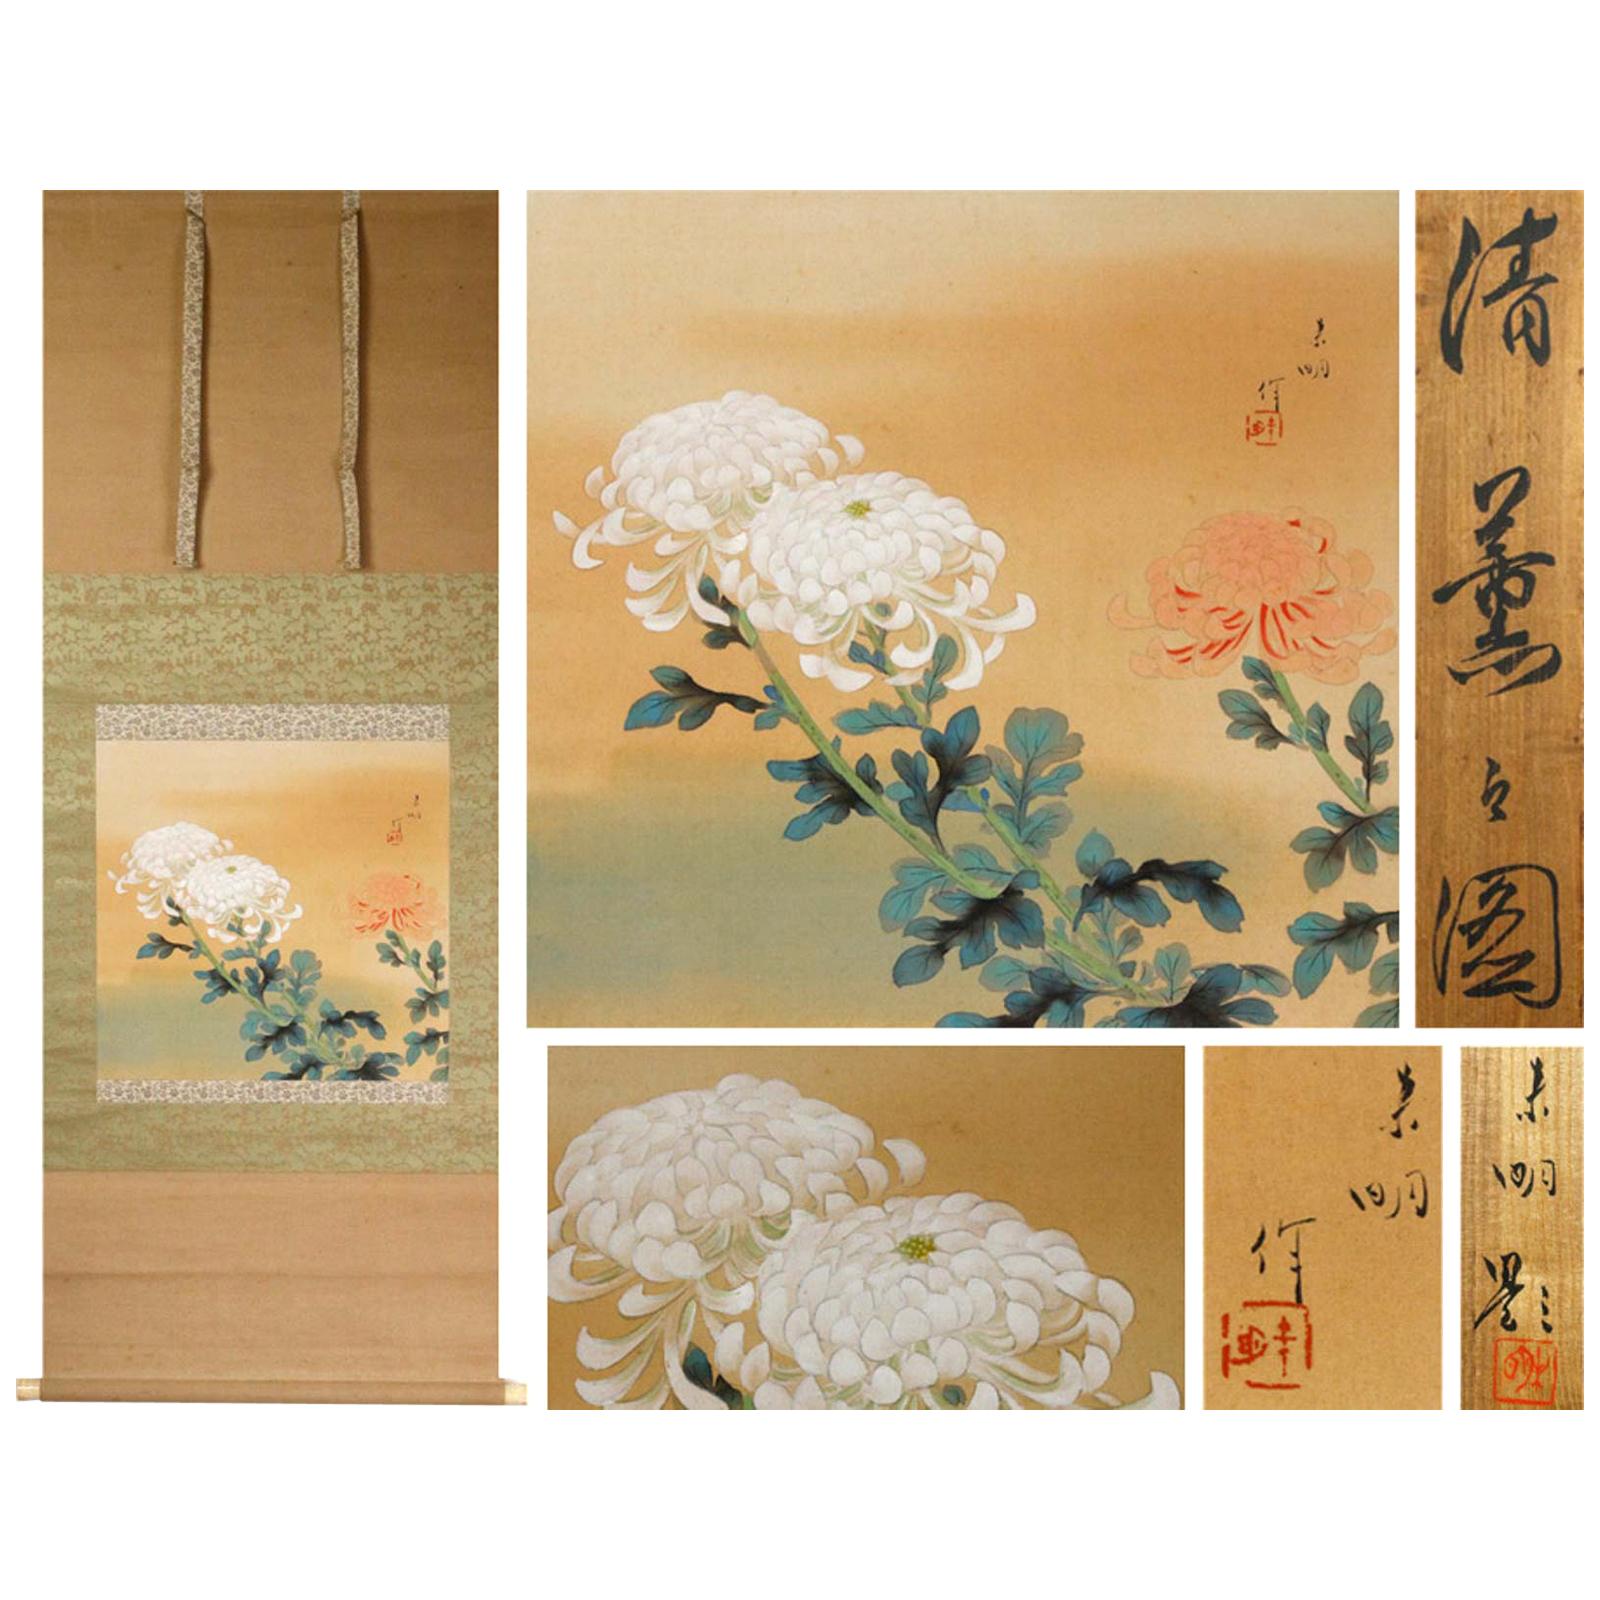 Lovely Scroll Painting Japan, 20th Century 'Showa' Artist Flower